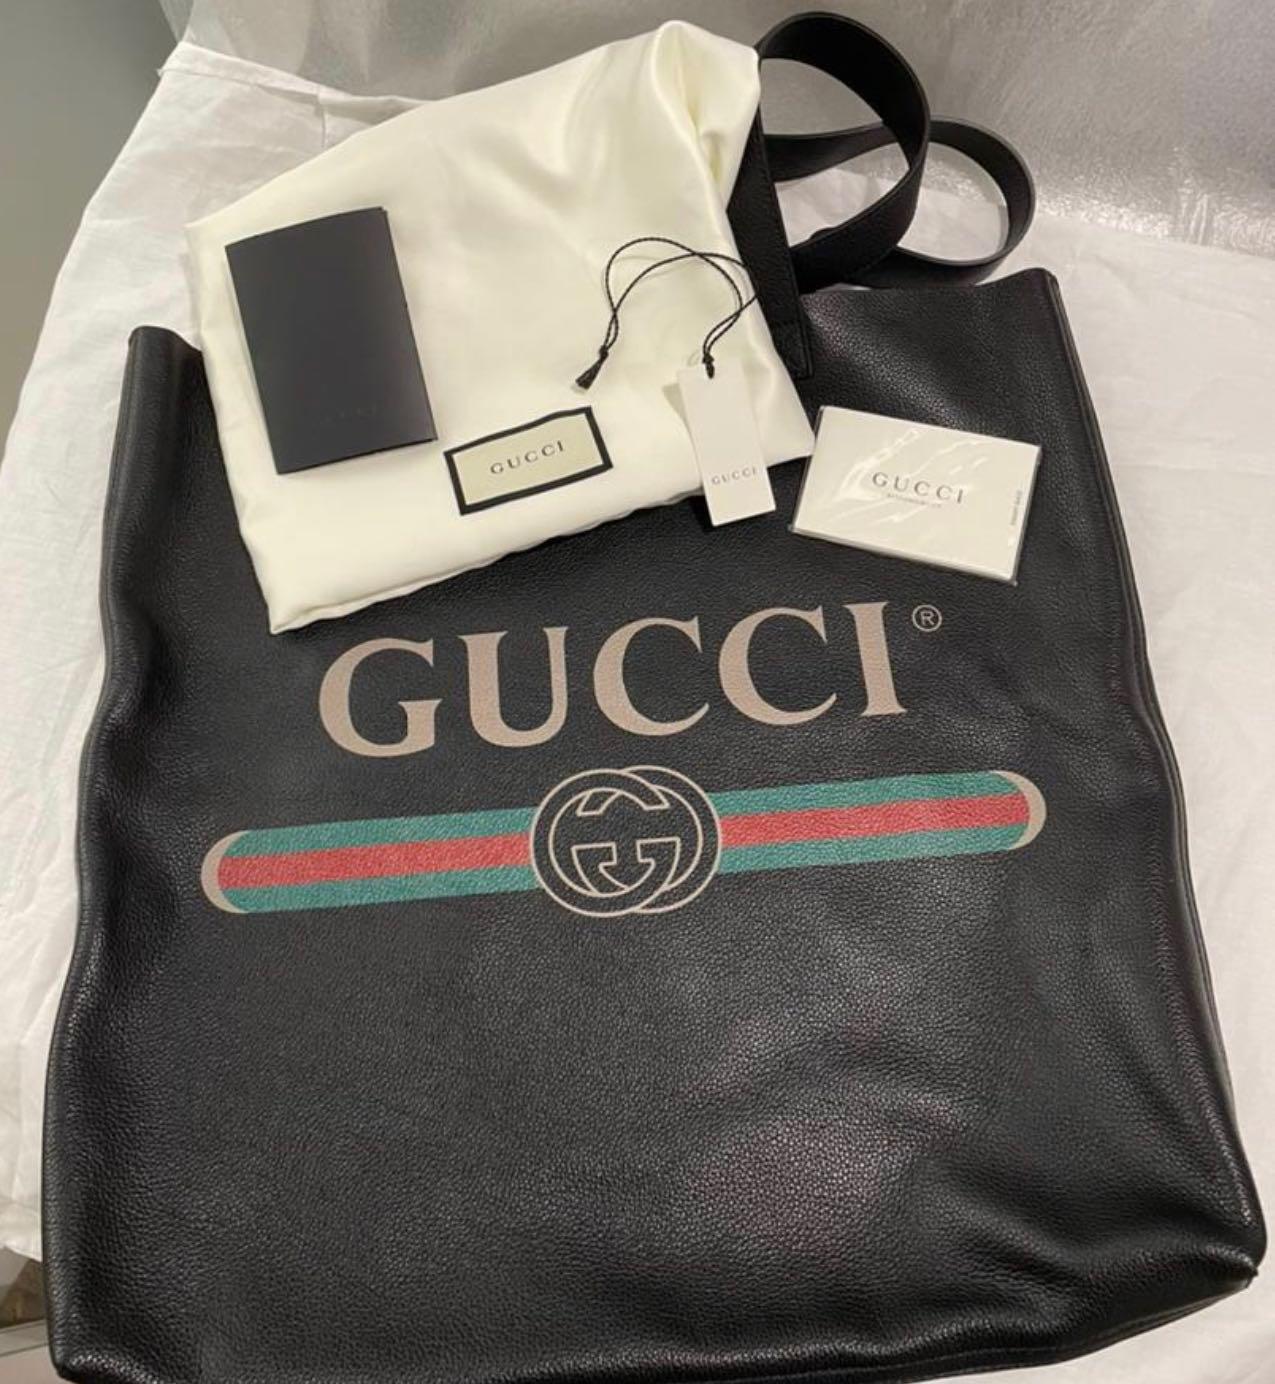 ❤️SOLD❤️Authentic Gucci Belt Bag | Gucci belt bag, Authentic gucci belt,  Vintage gucci purse